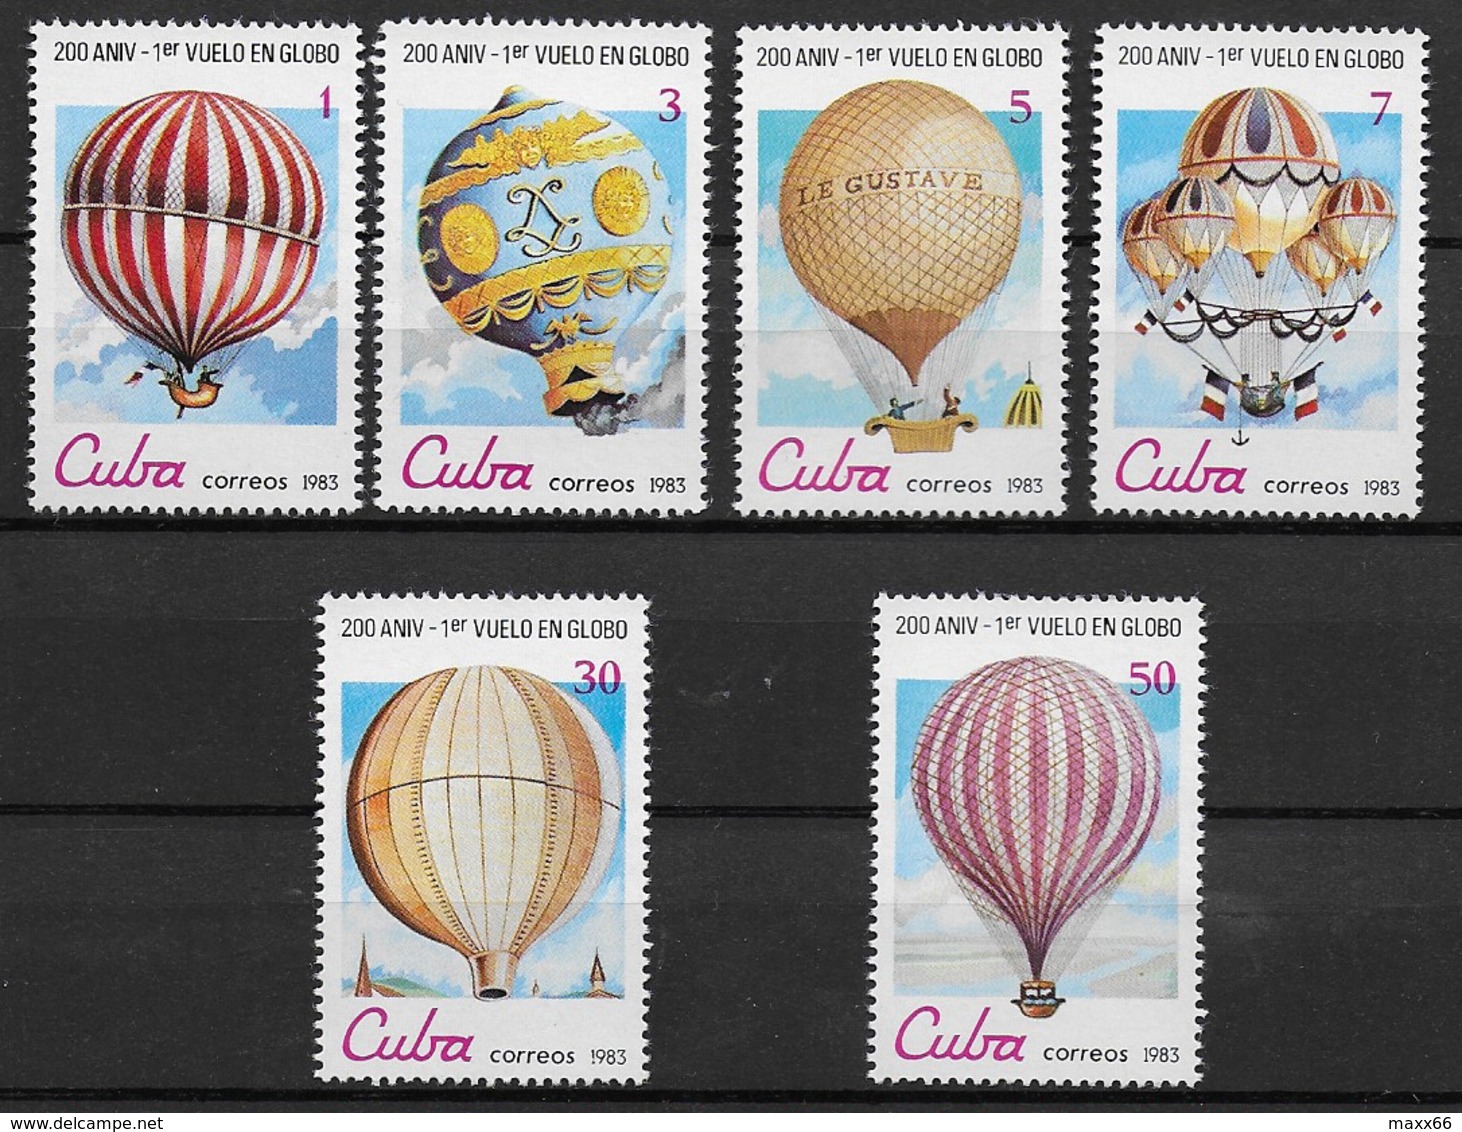 CUBA MNH - 1983 The 200th Anniversary Of Manned Flight - Balloons - Vari ¢ - Michel CU 2725 - 2730 - Nuovi